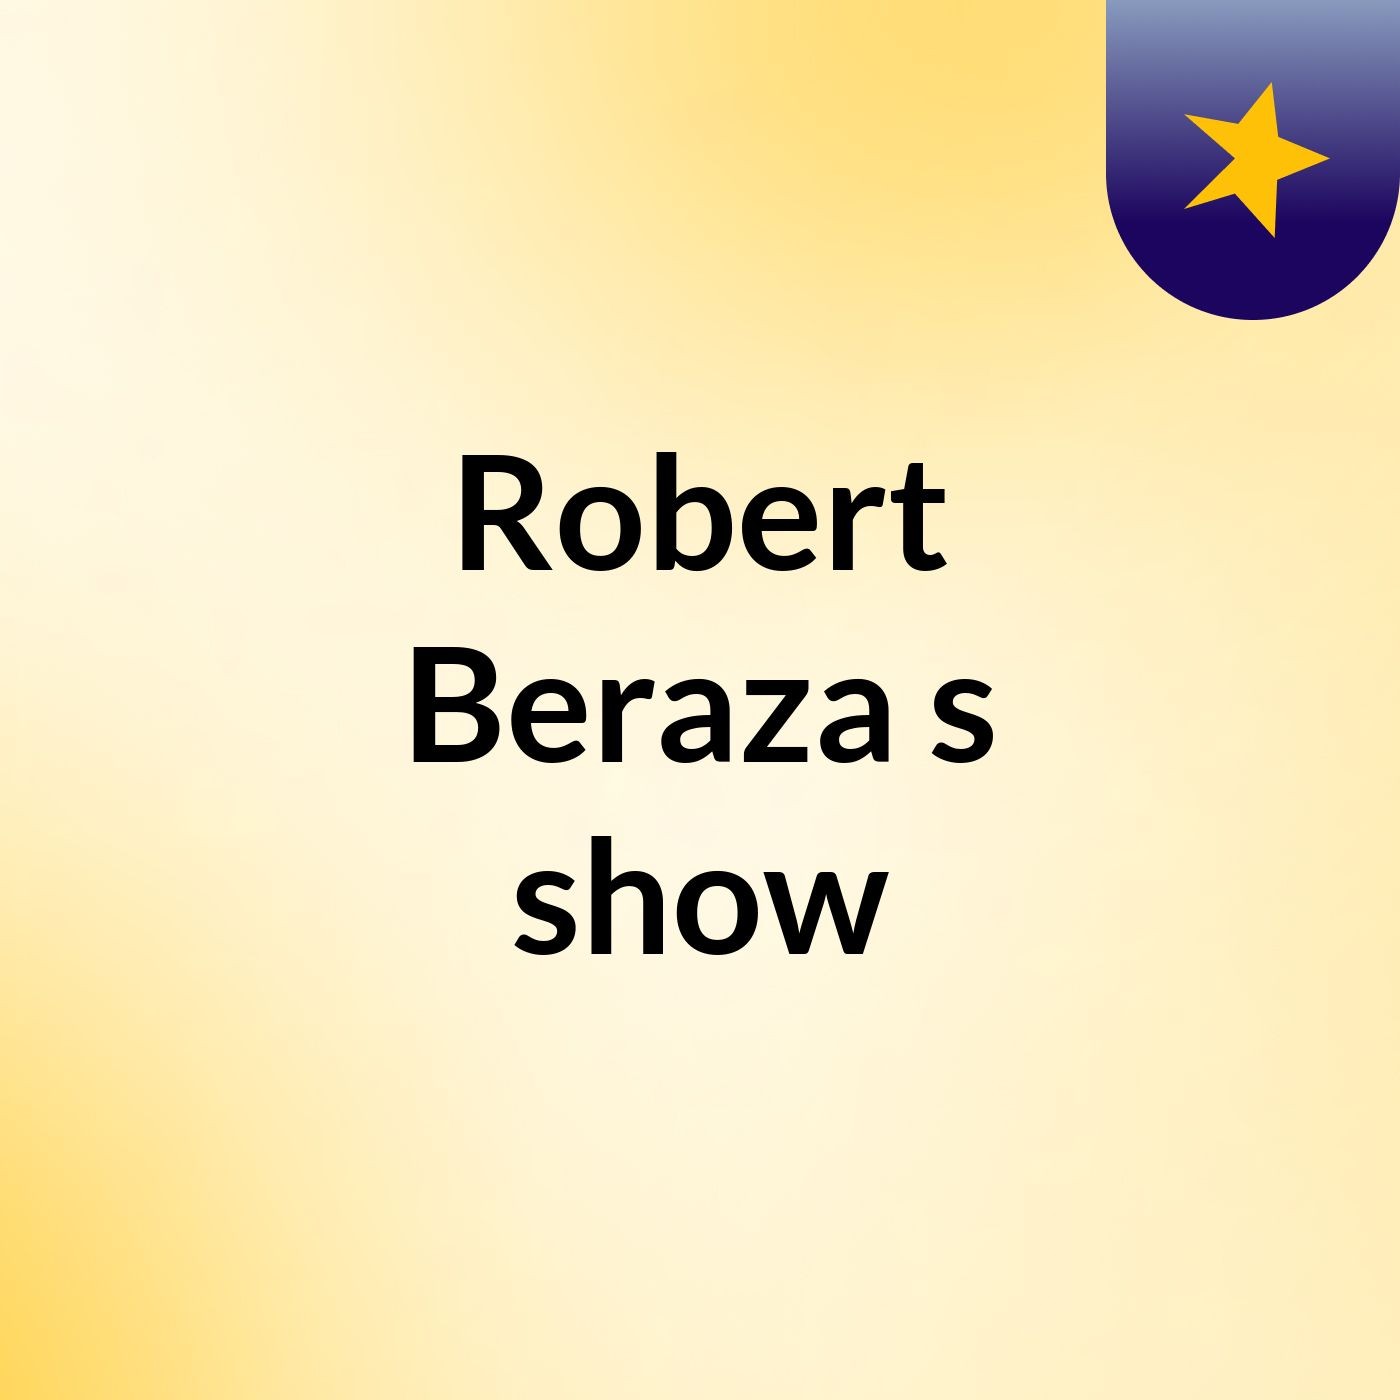 Robert Beraza's show